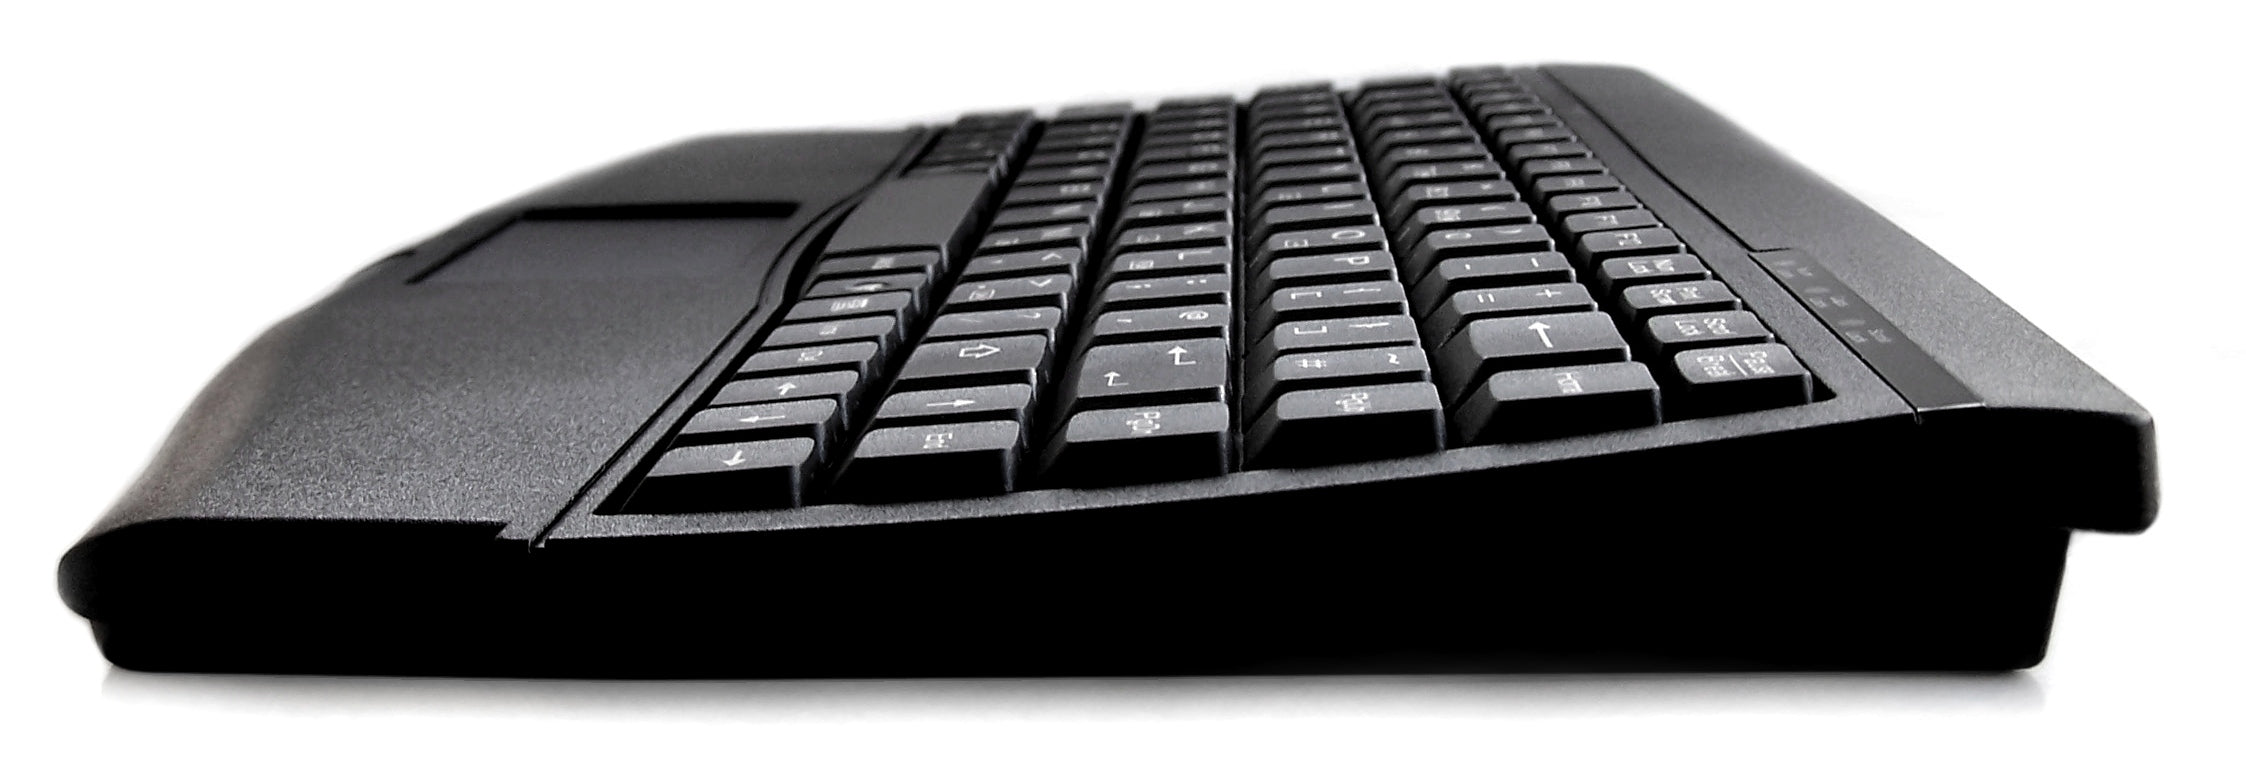 Accuratus 540 - USB Professional Mini Keyboard with Touchpad